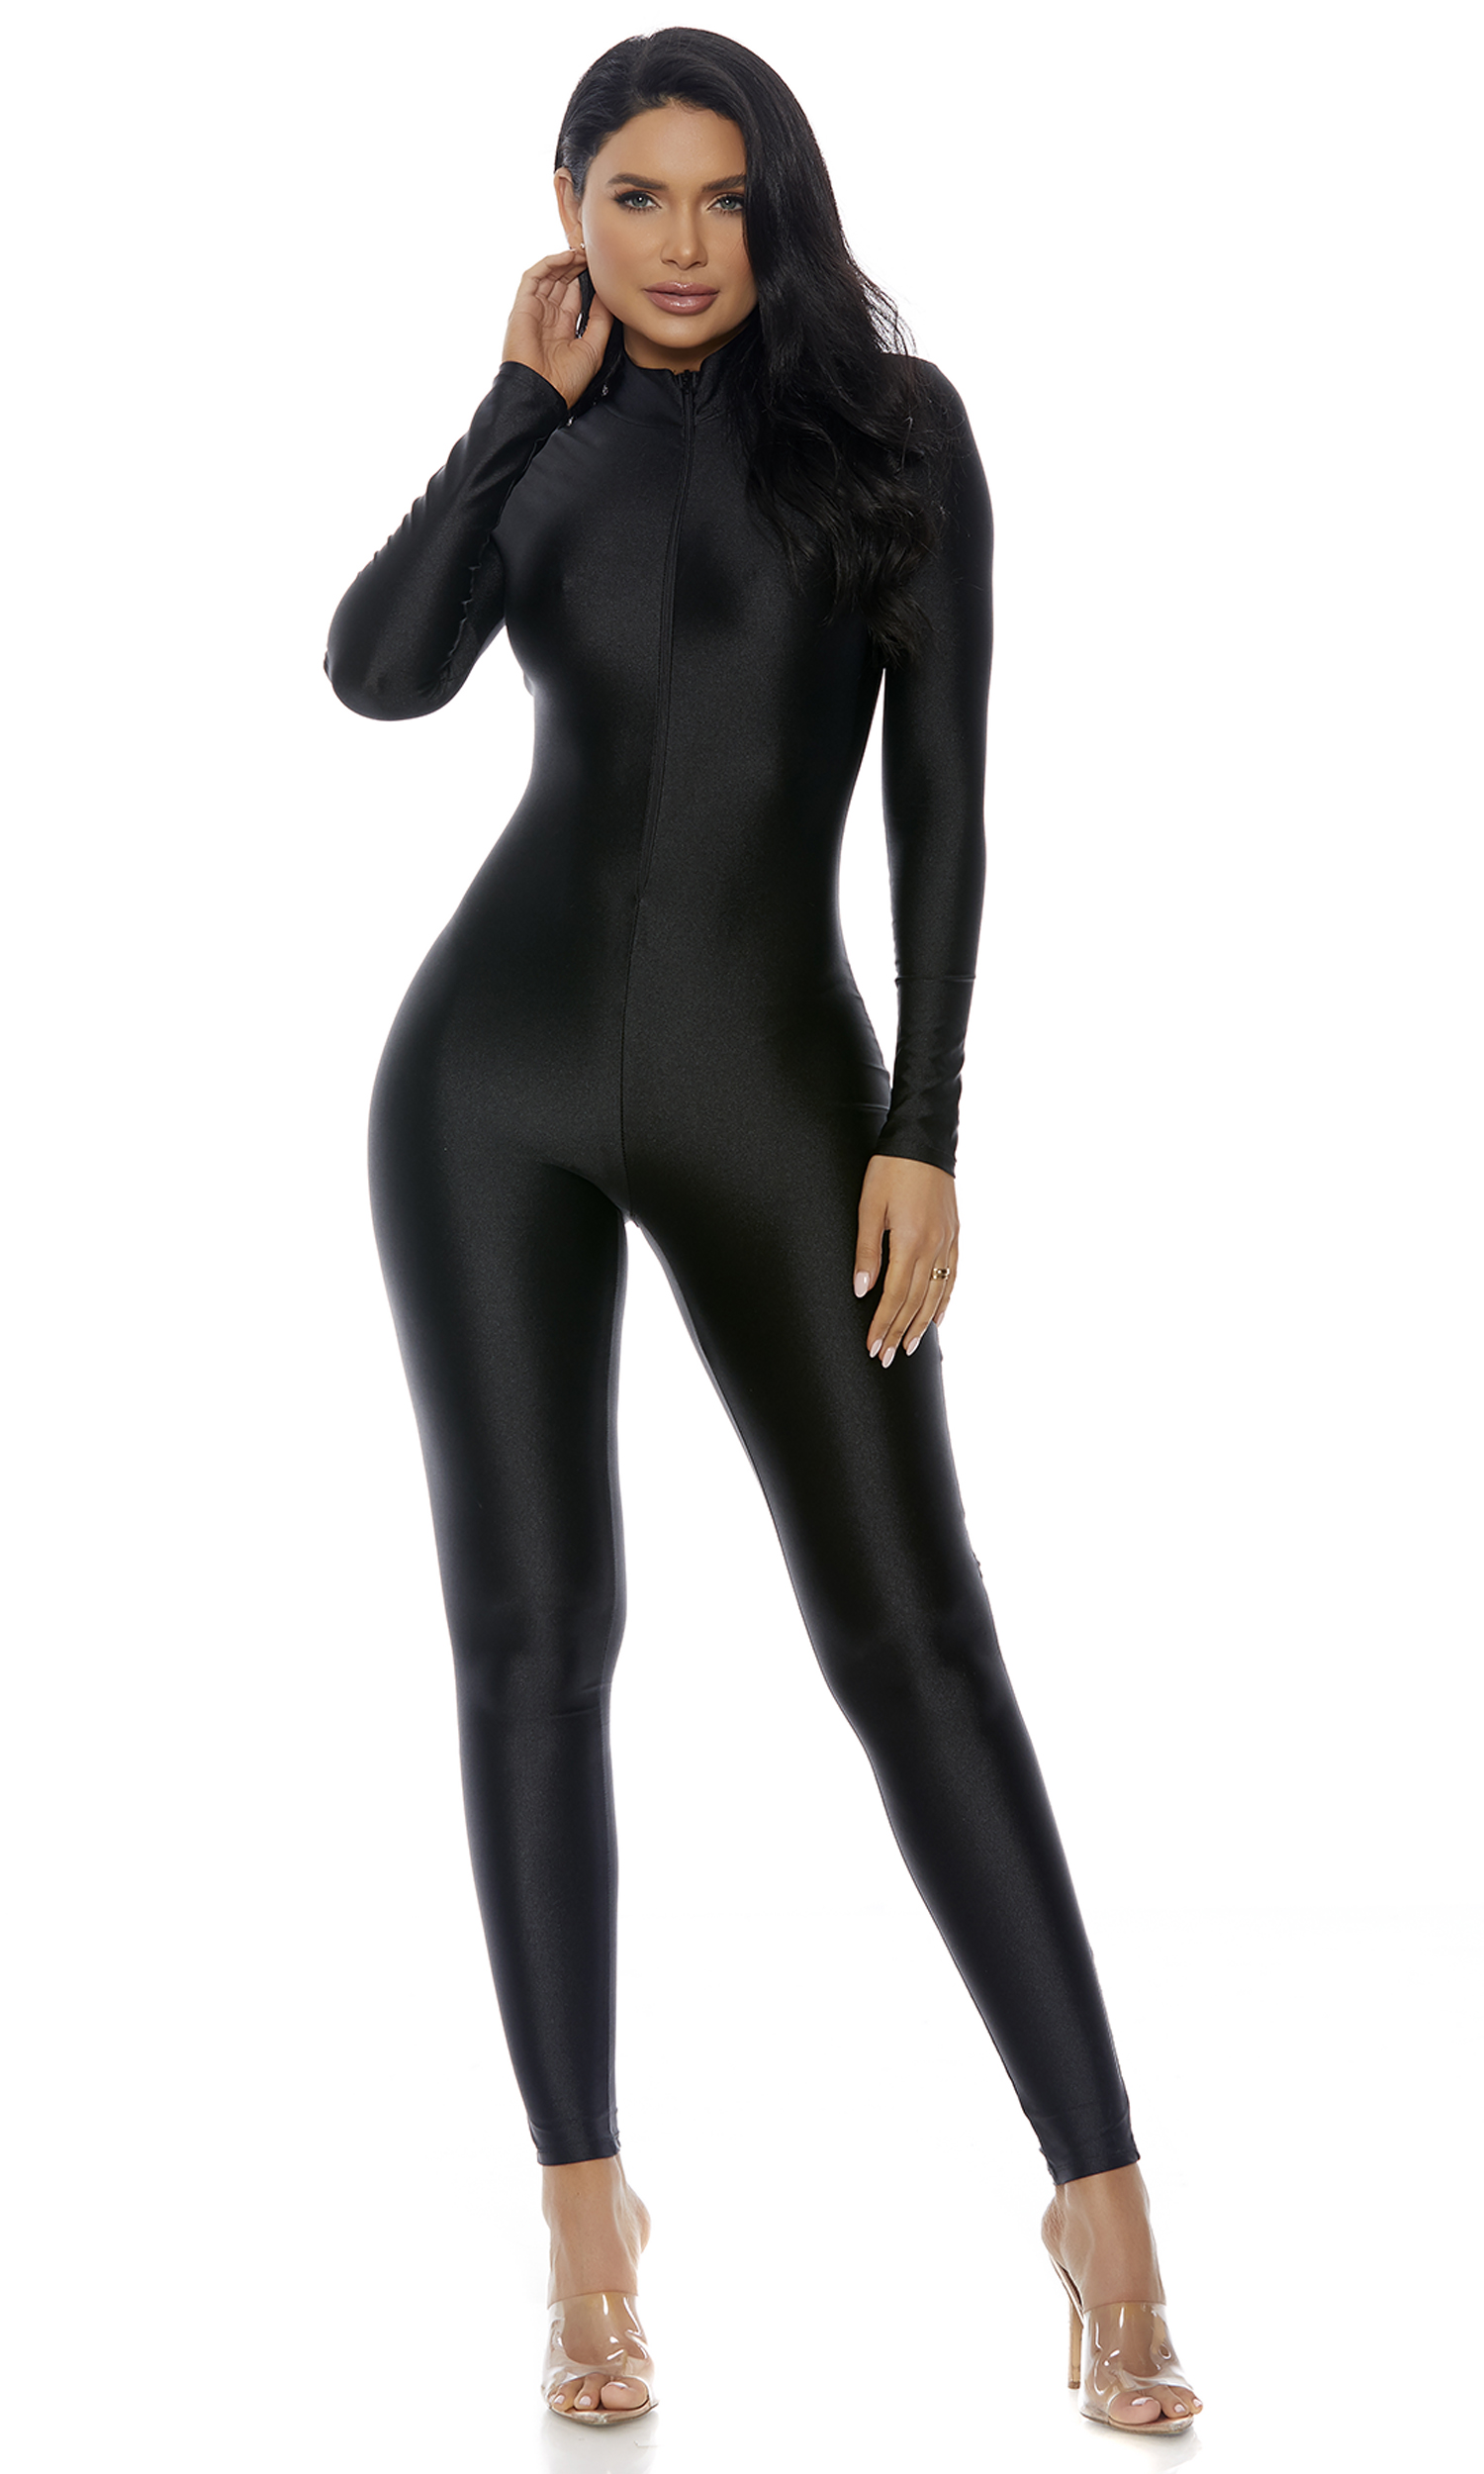 Adult Black Bodysuit Woman Creative Costume, $48.99